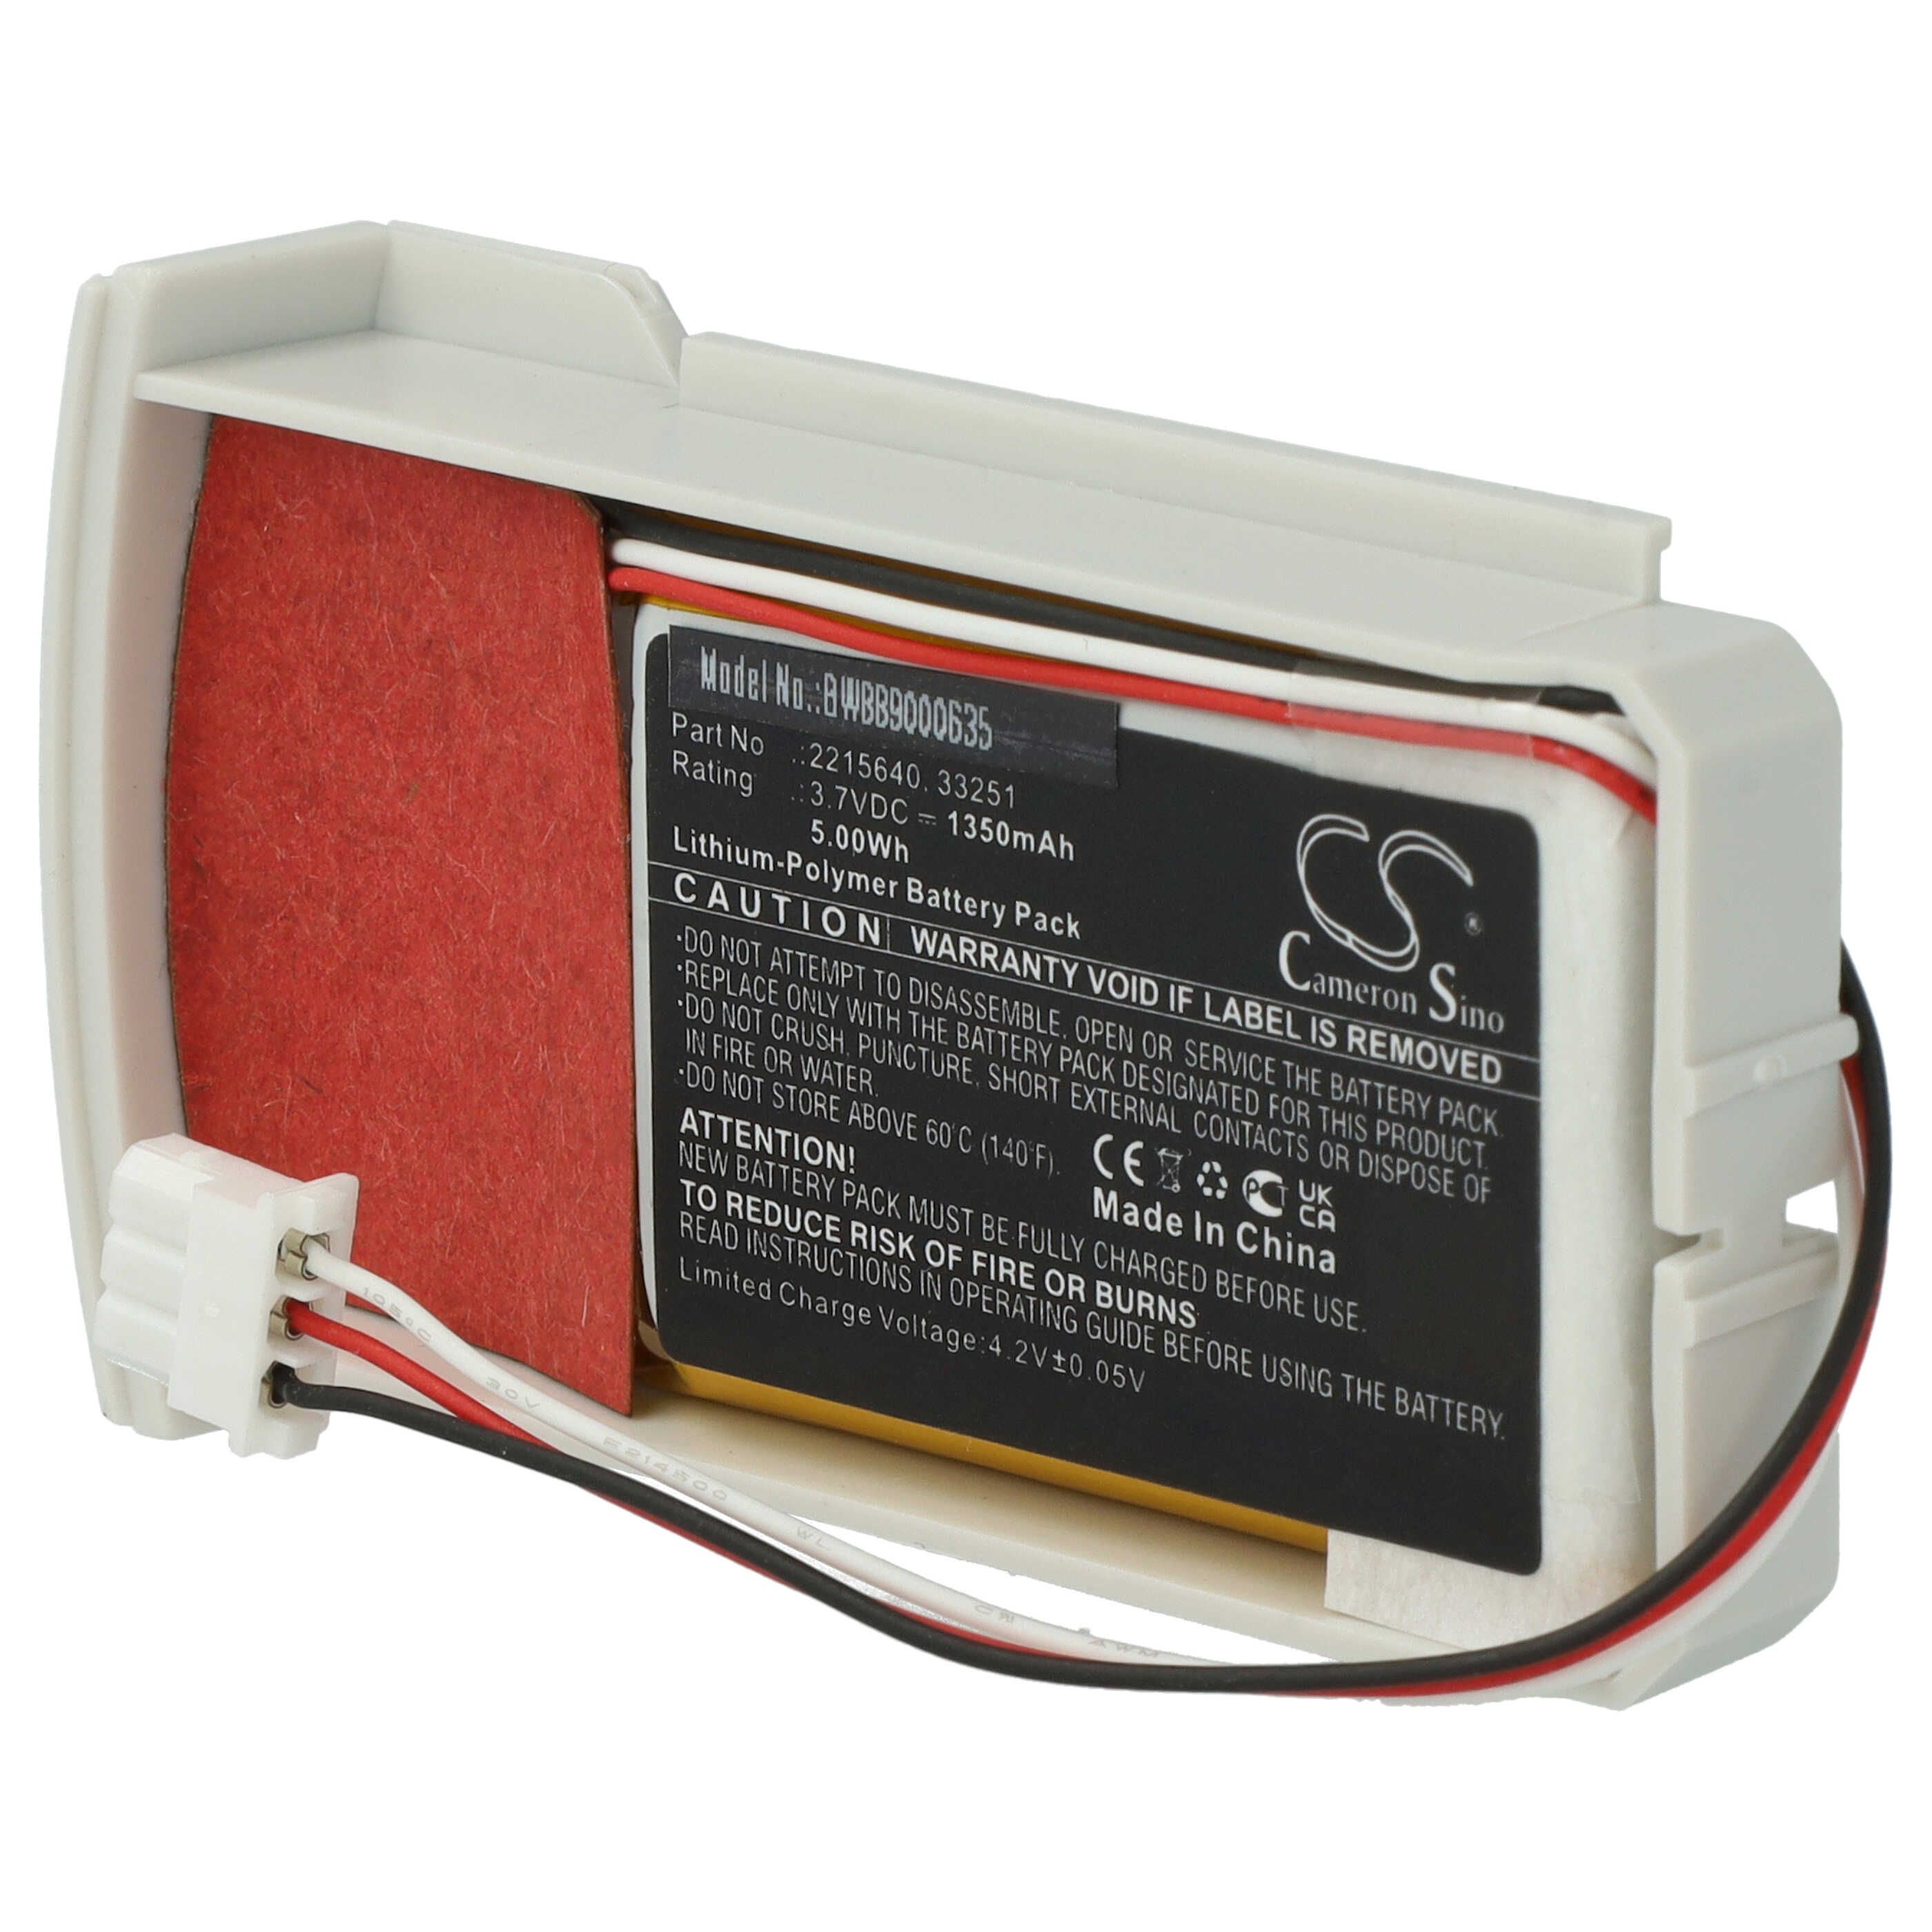 Akumulator zamiennik Thermo Scientific 33251, 2215640 - 1350 mAh 3,7 V LiPo